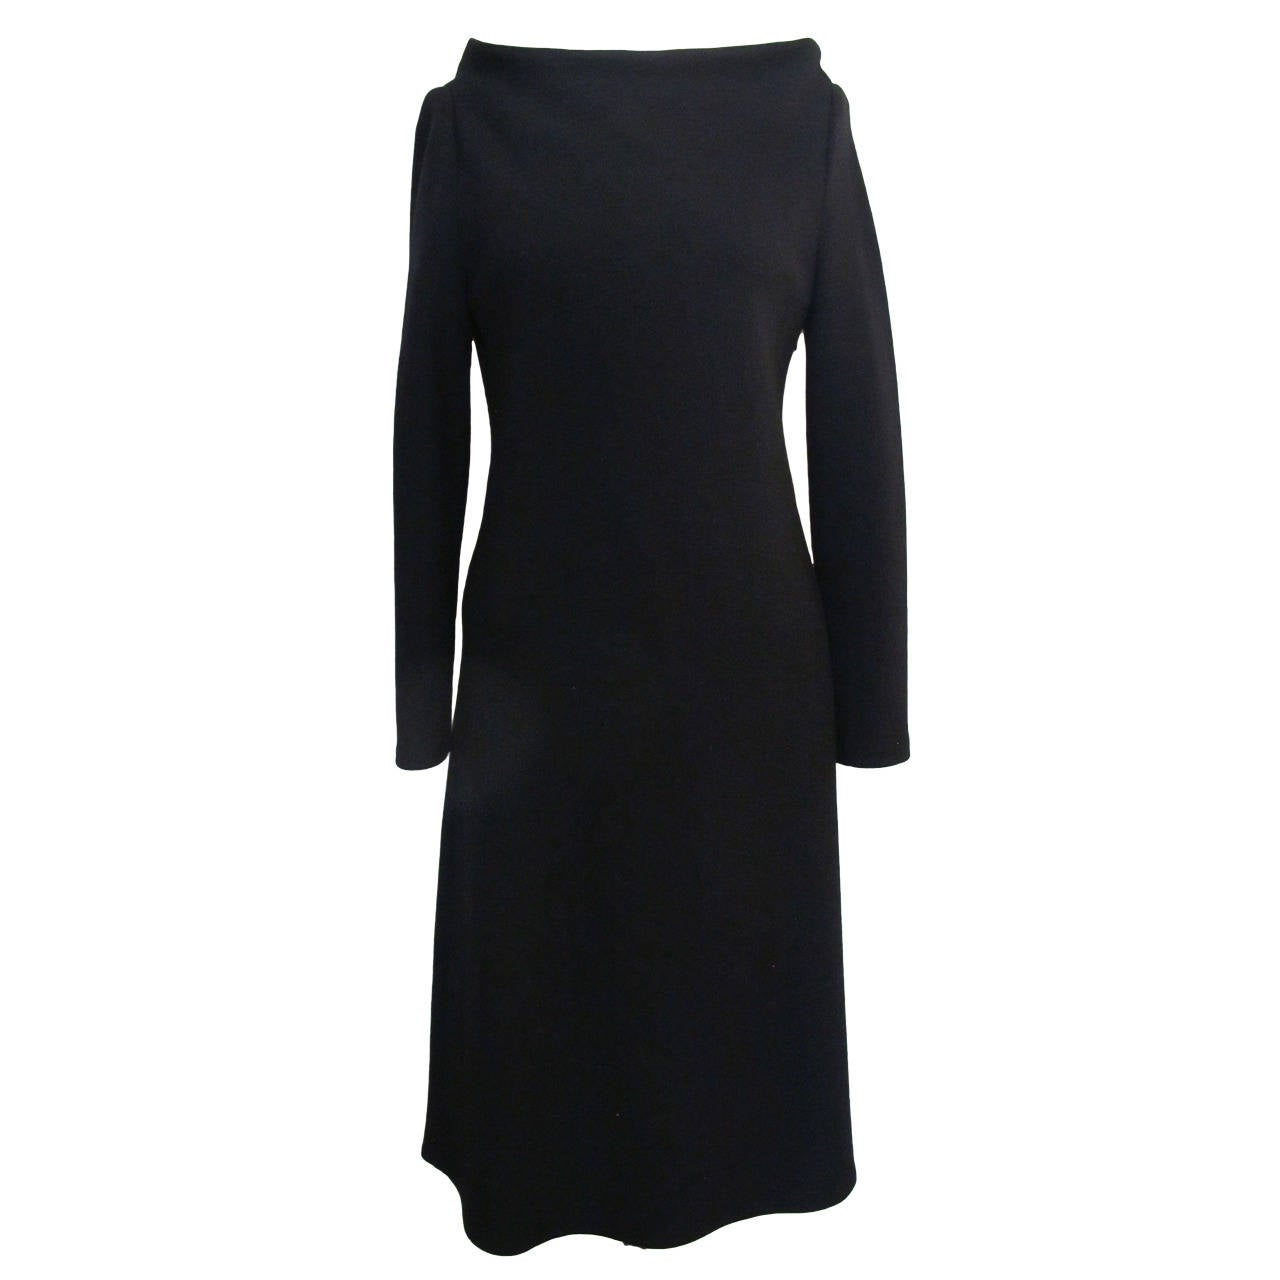 Barbara Schwarzer for Bergdorf Goodman Black Dress For Sale